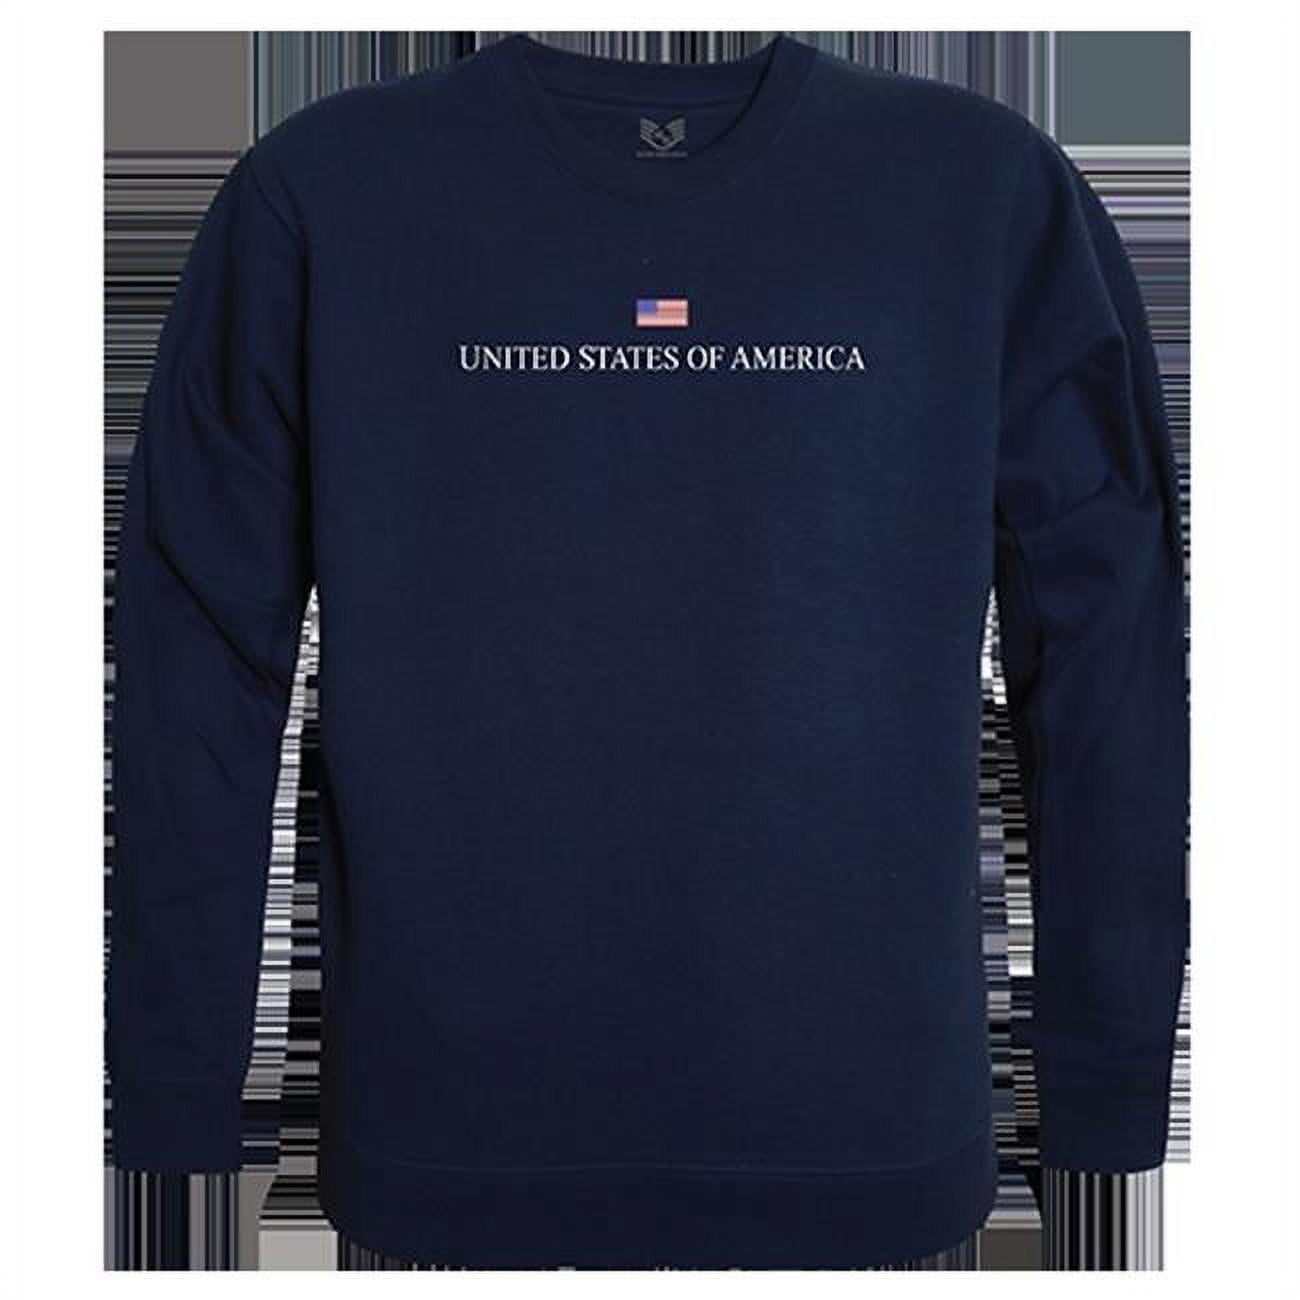 Rapiddominance Navy Crewneck Sweatshirt 